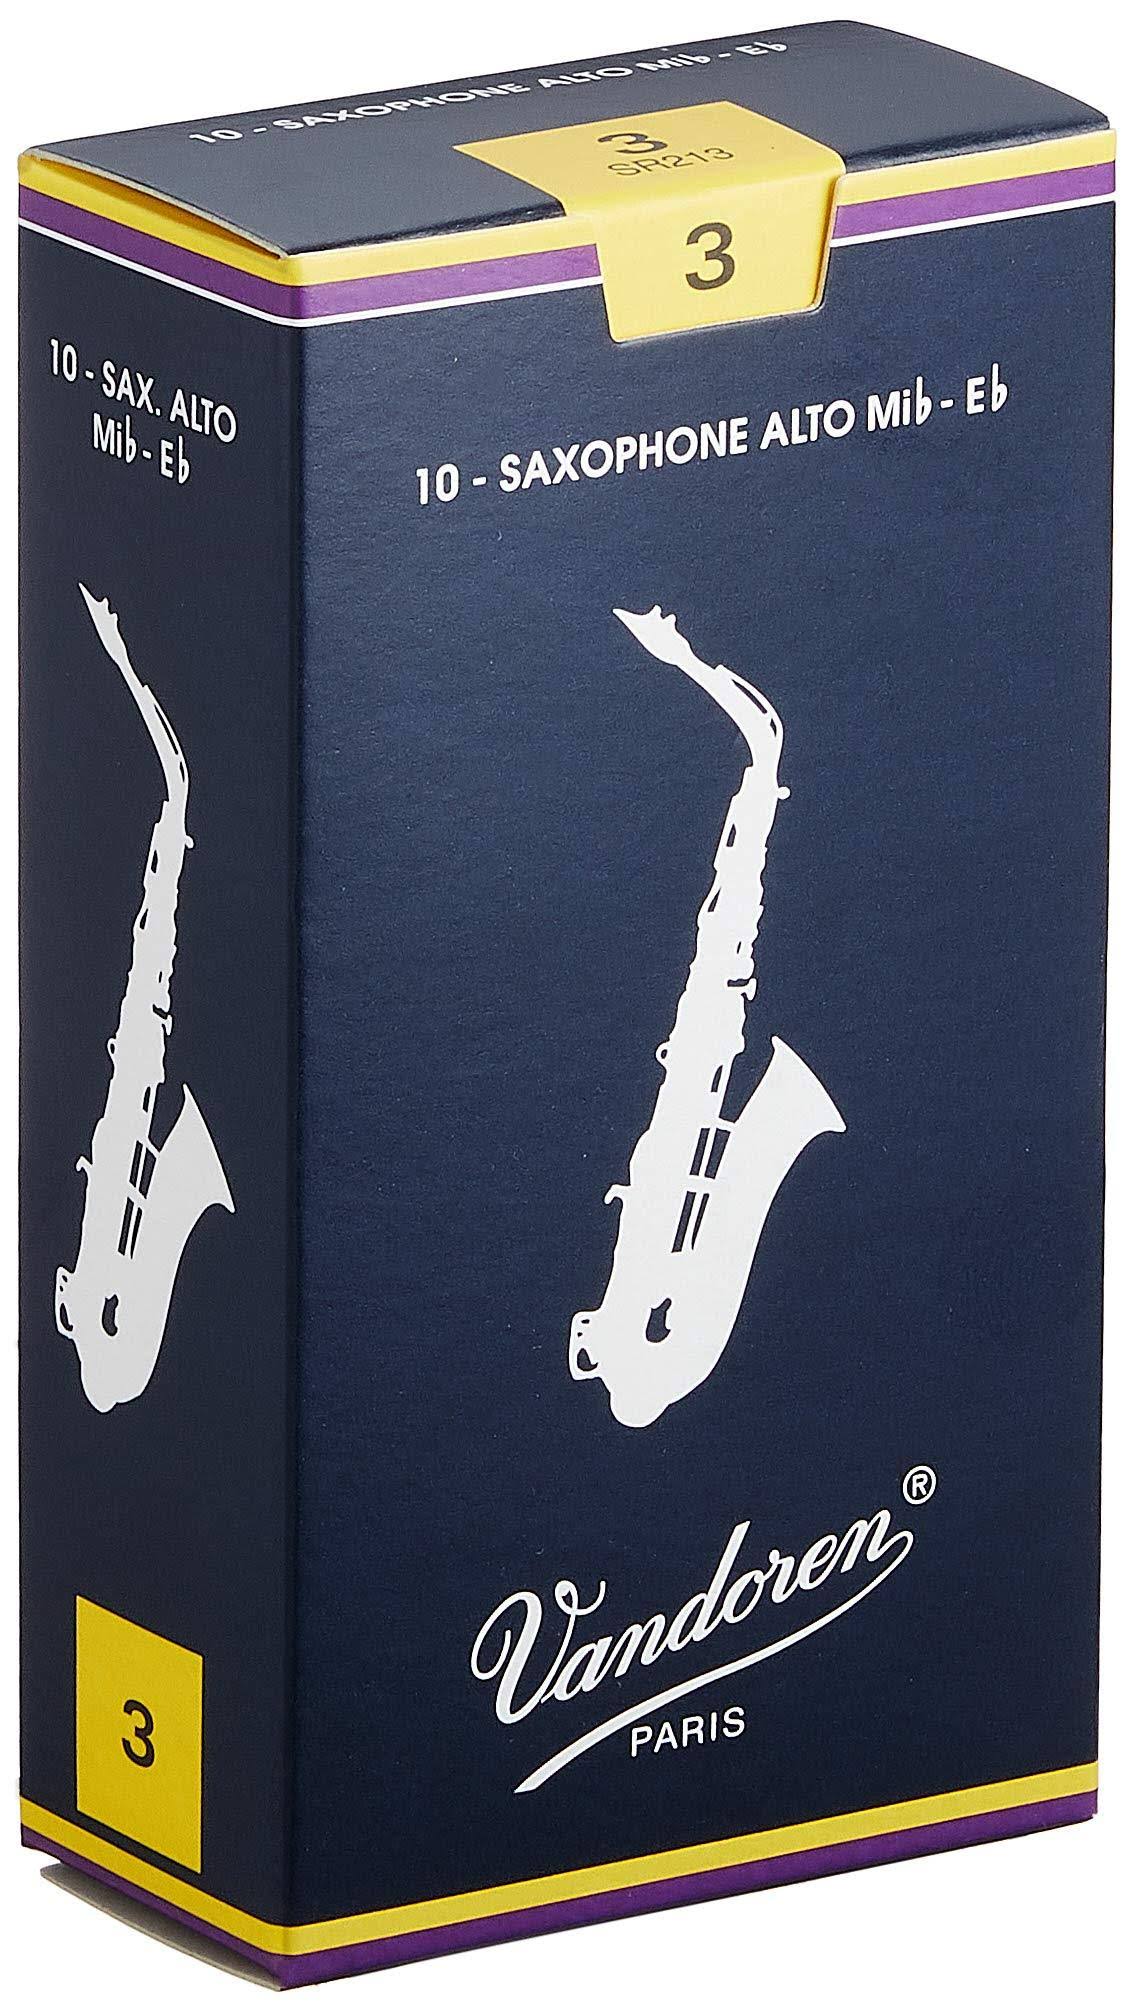 Vandoren Paris Saxophone Reeds - 3 Strength, Alto